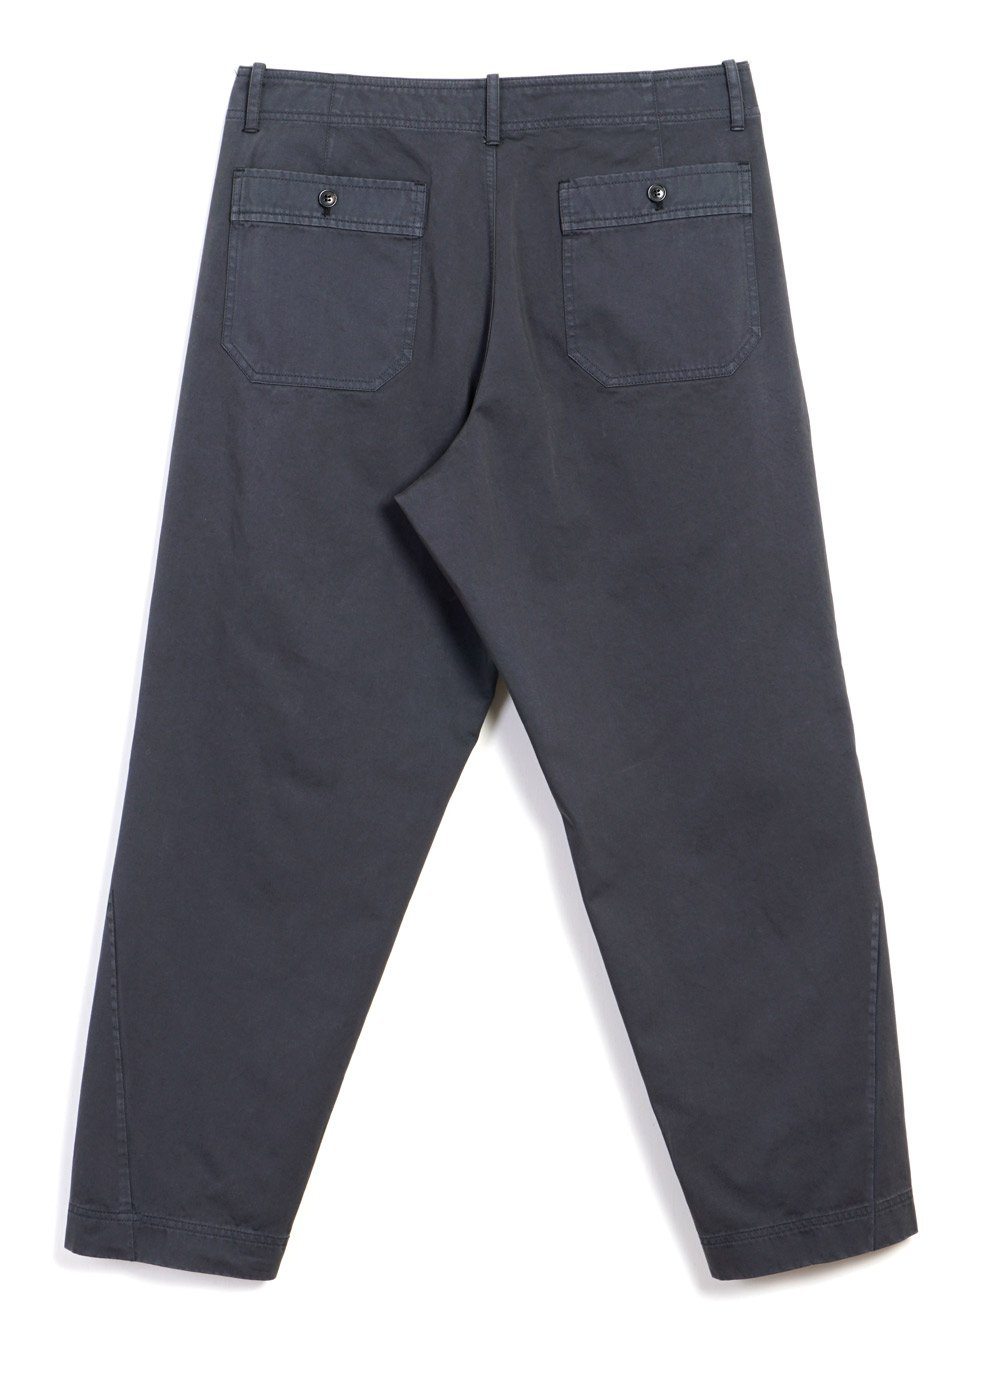 HANSEN GARMENTS - TRYGVE | Wide Cut Cropped Trousers | Grey - HANSEN Garments